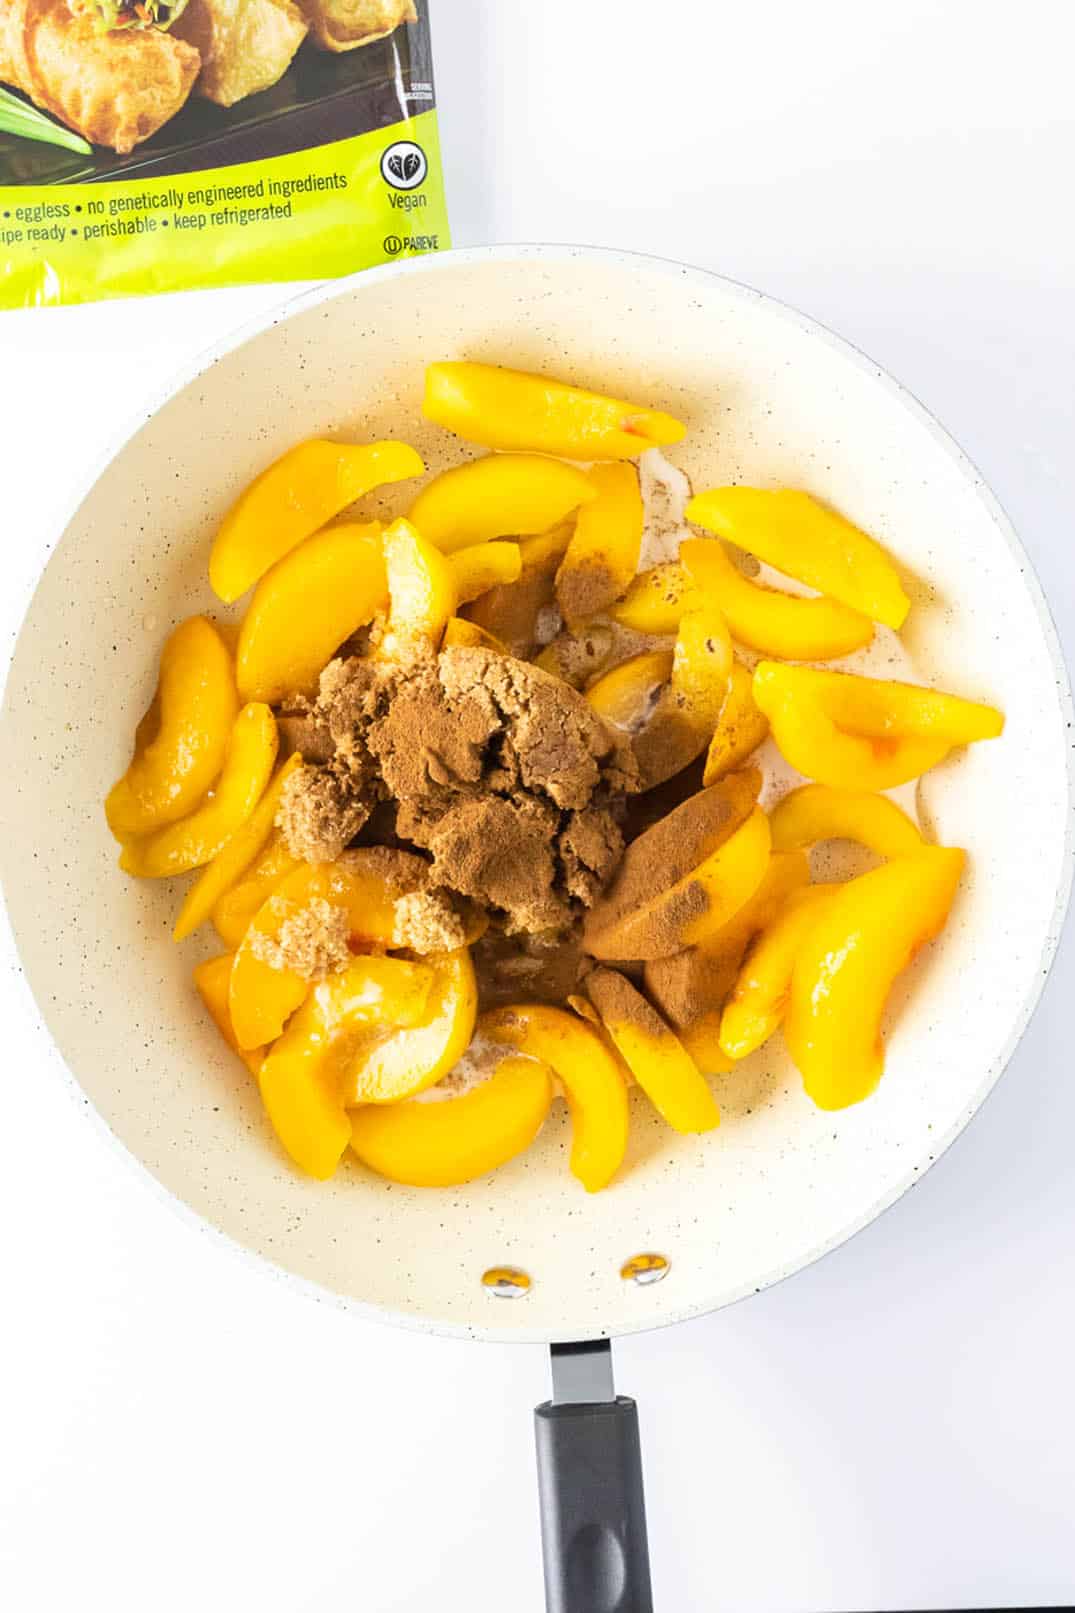 Peaches and brown sugar in a white ceramic bowl